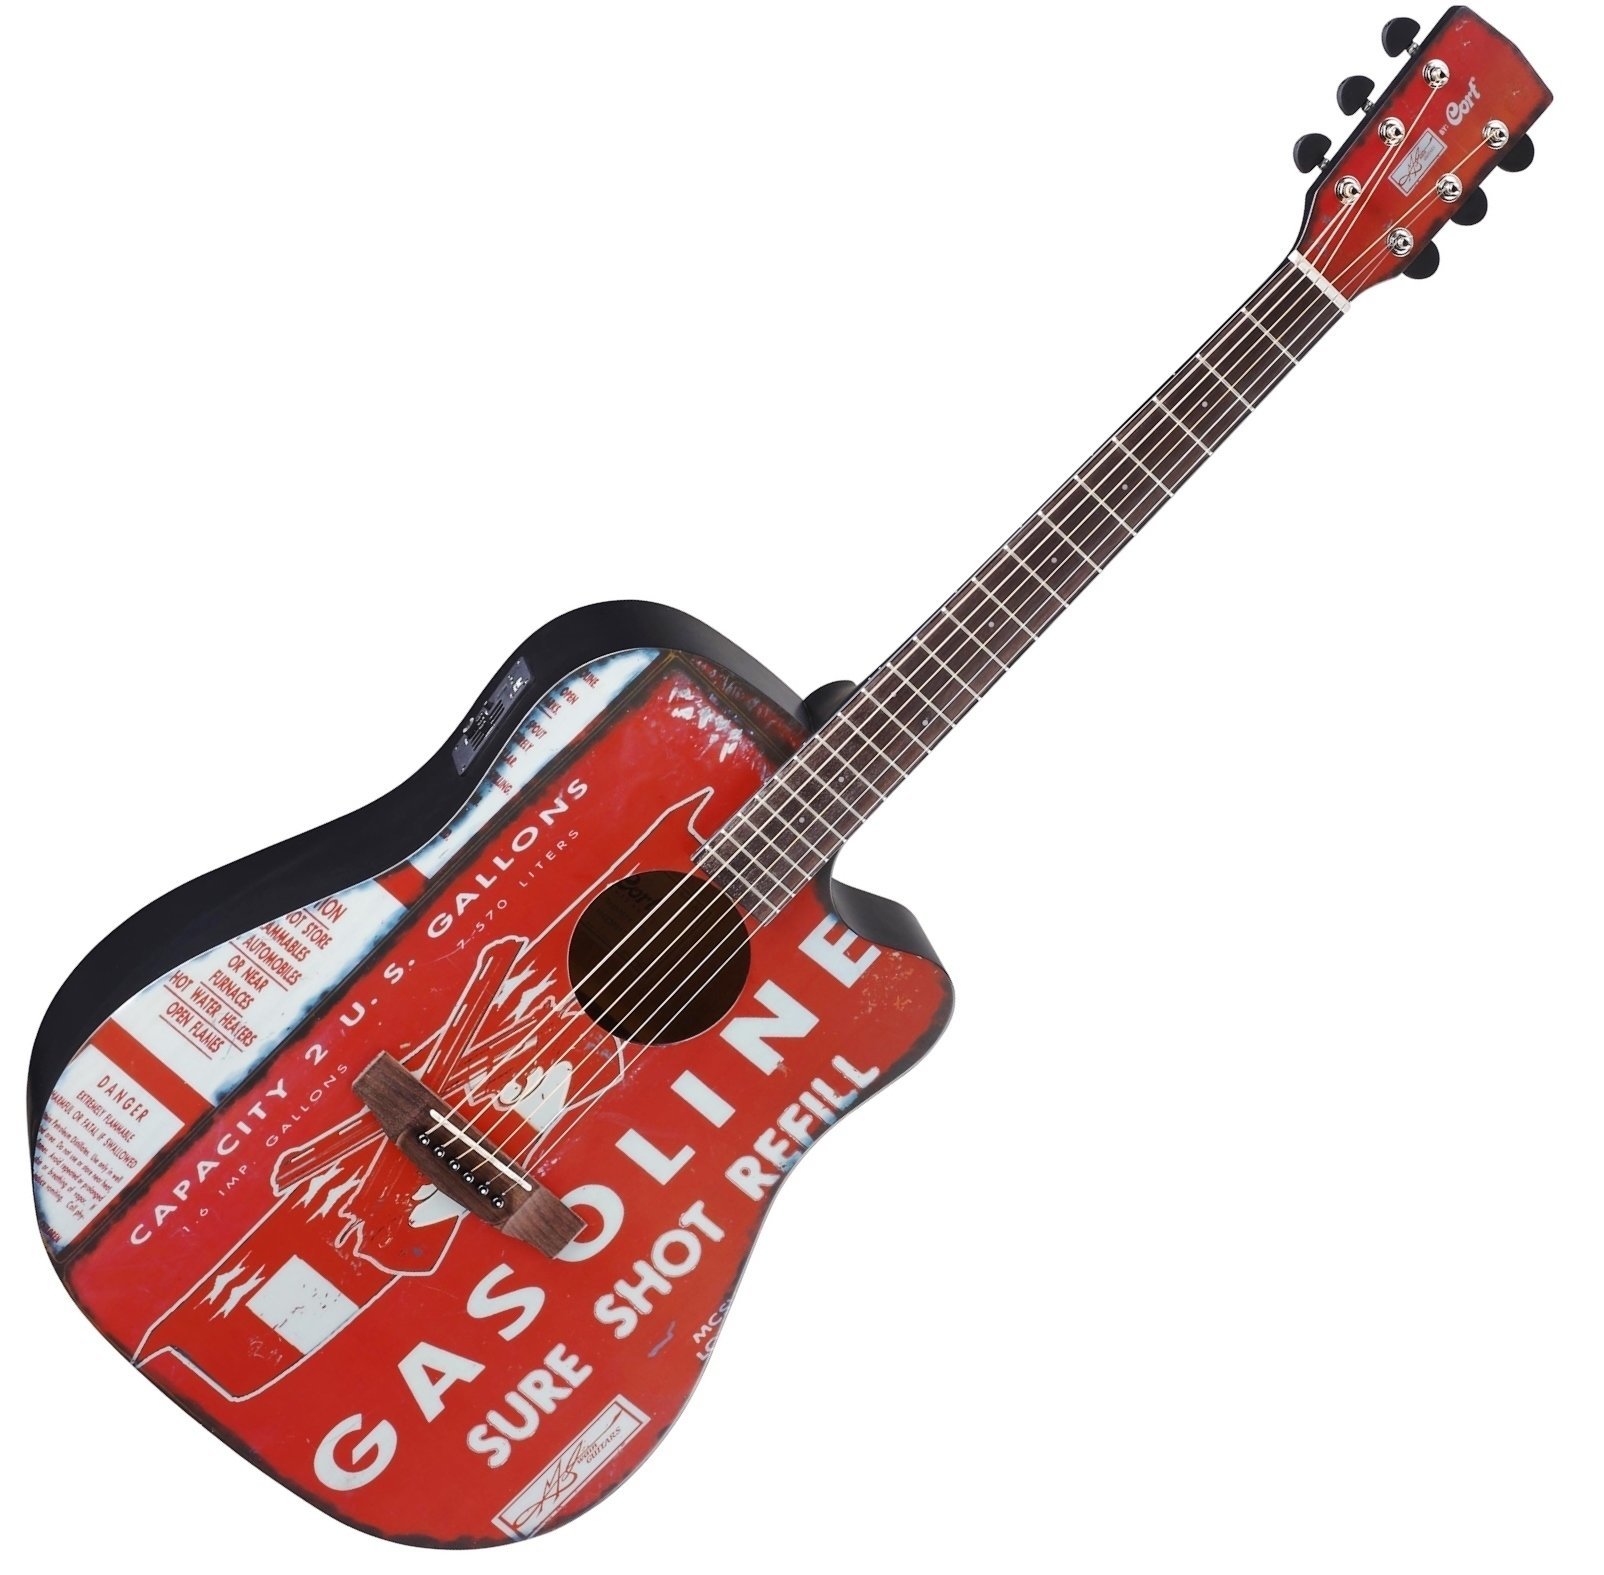 Dreadnought elektro-akoestische gitaar Cort GASOLINE 2 BKS